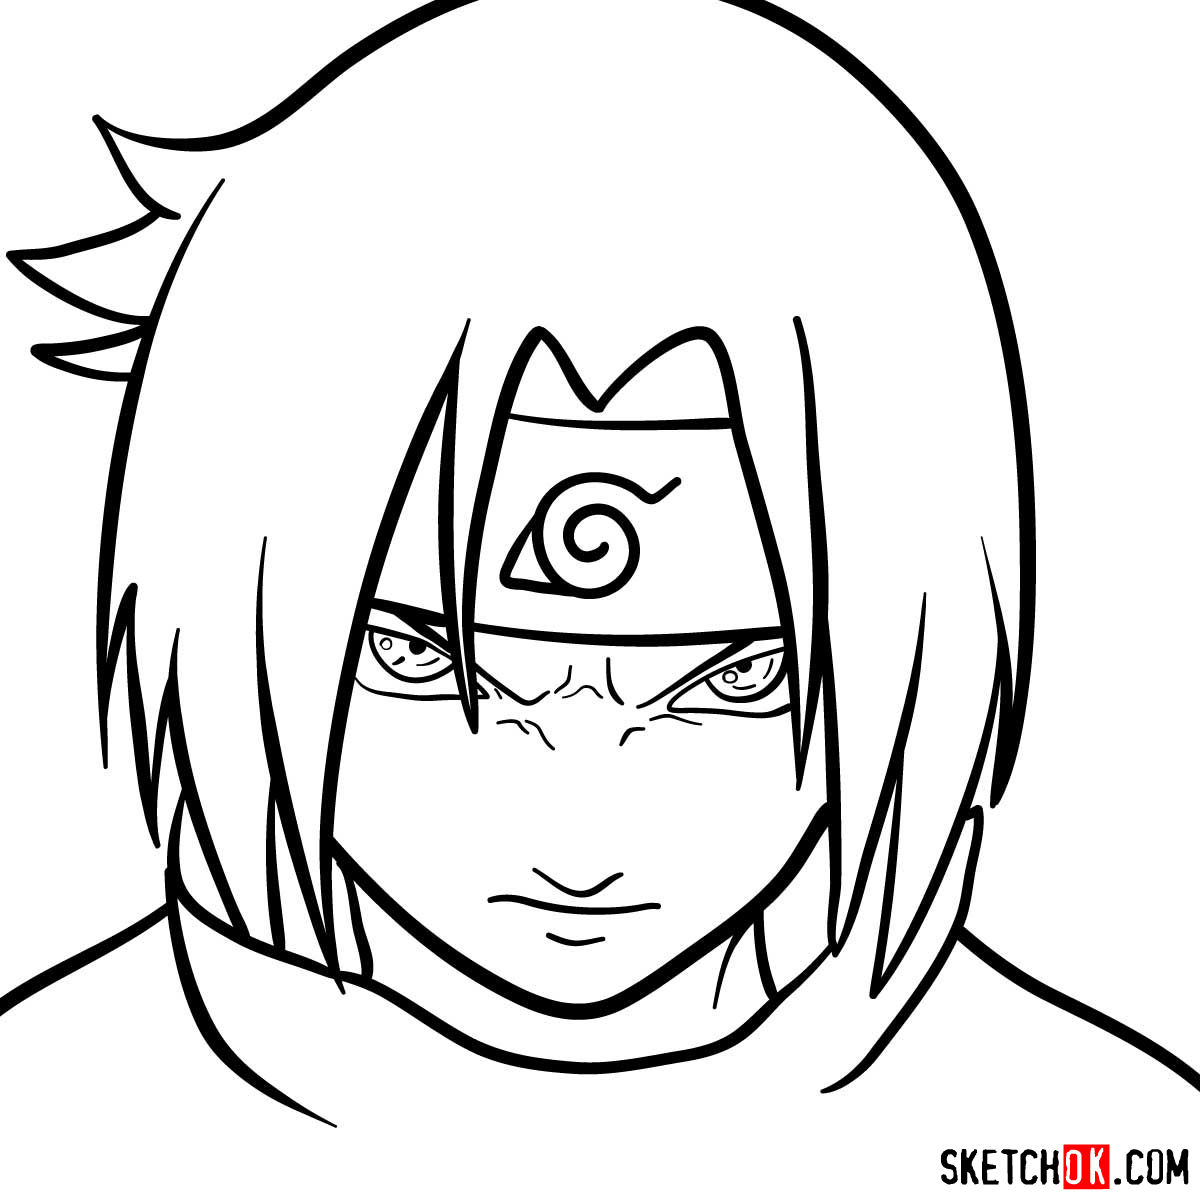 How to draw Sasuke's face (Naruto anime) - step 10